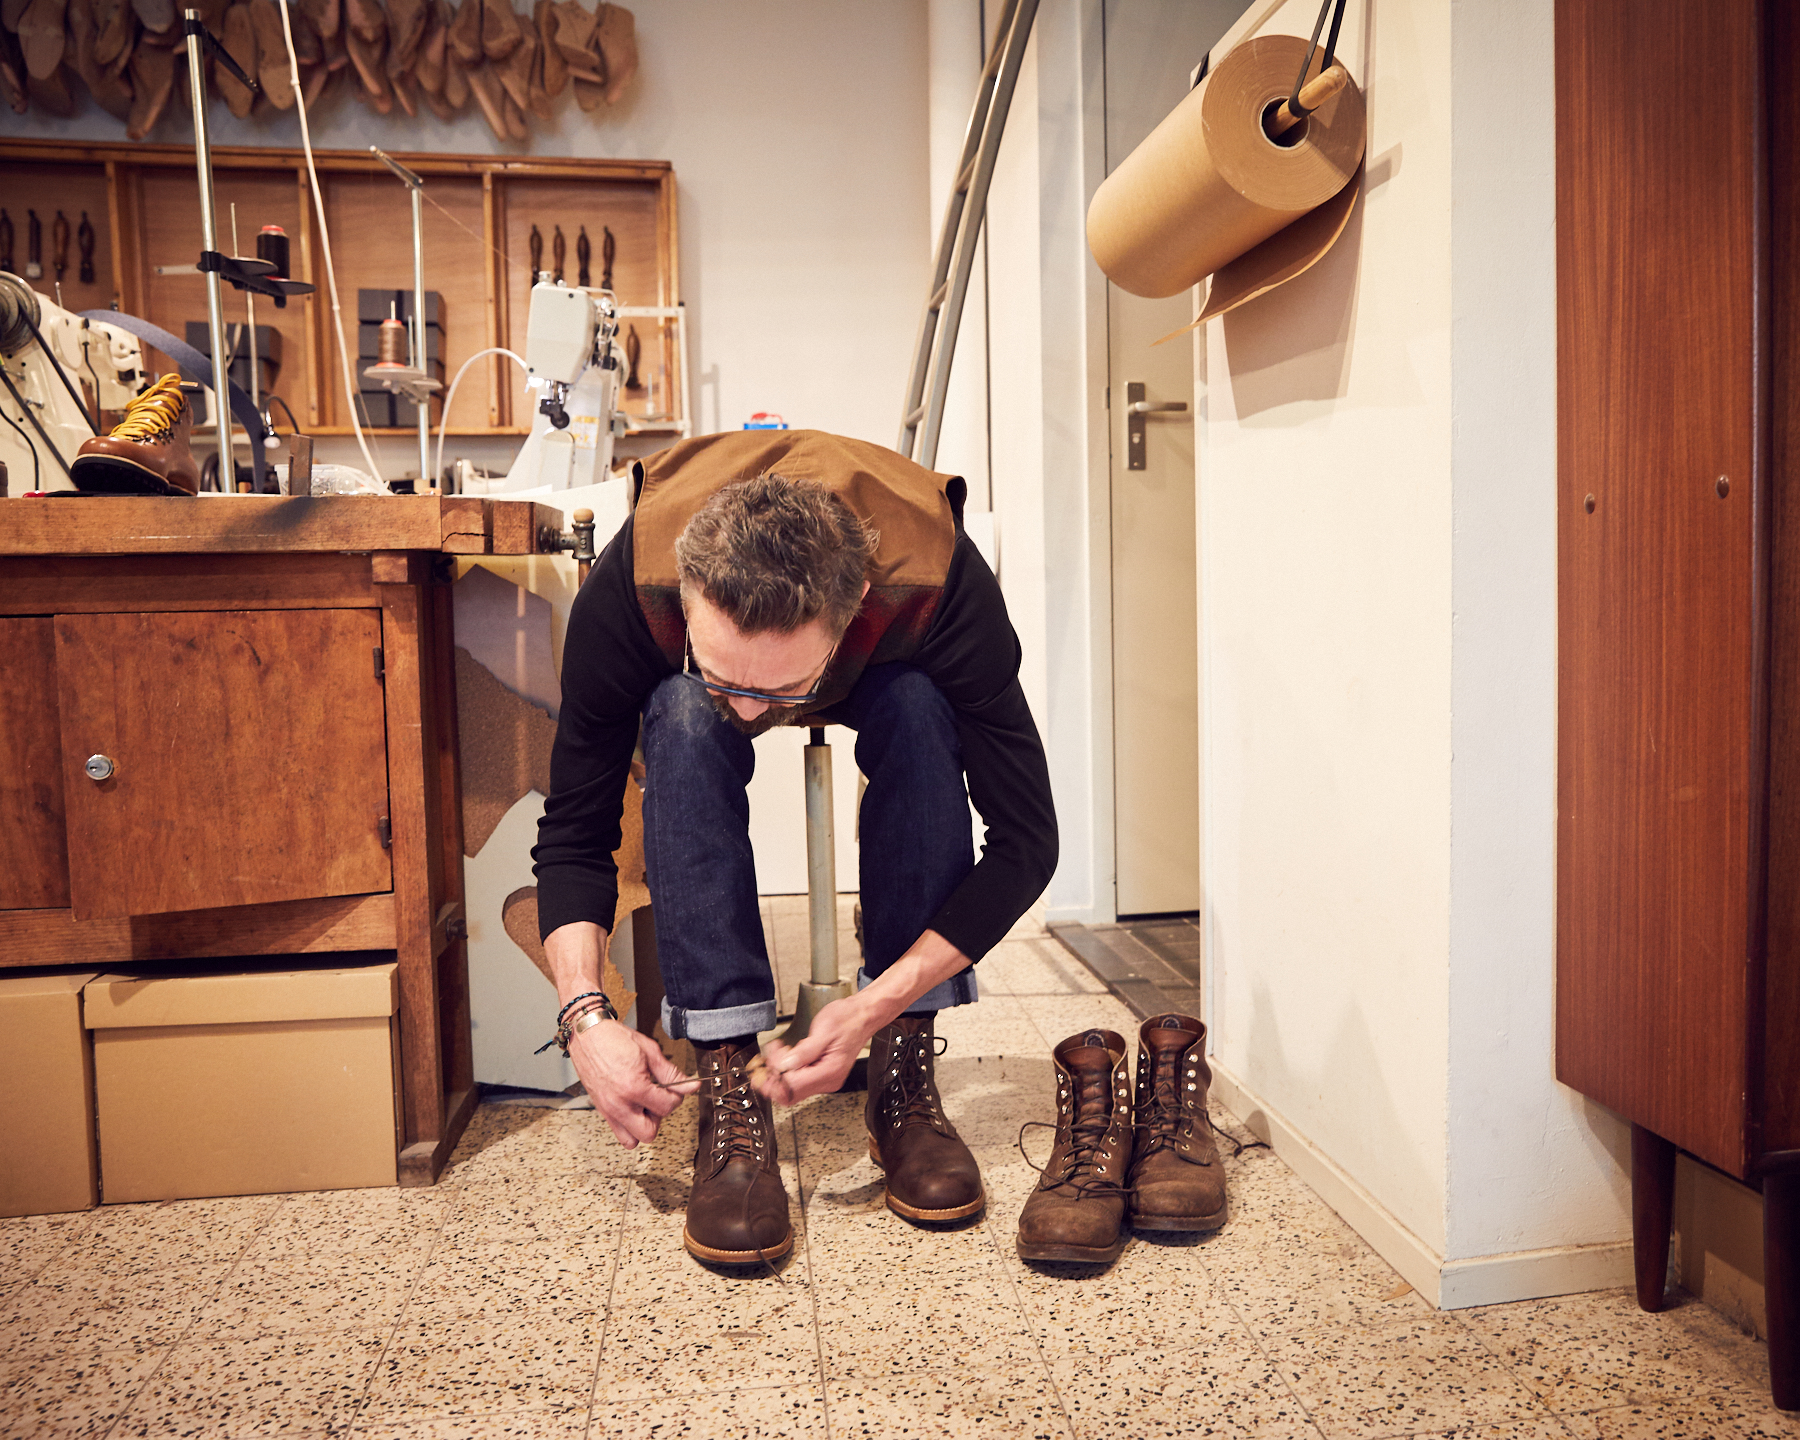 Shoe making course by Studio Rosanne Bergsma